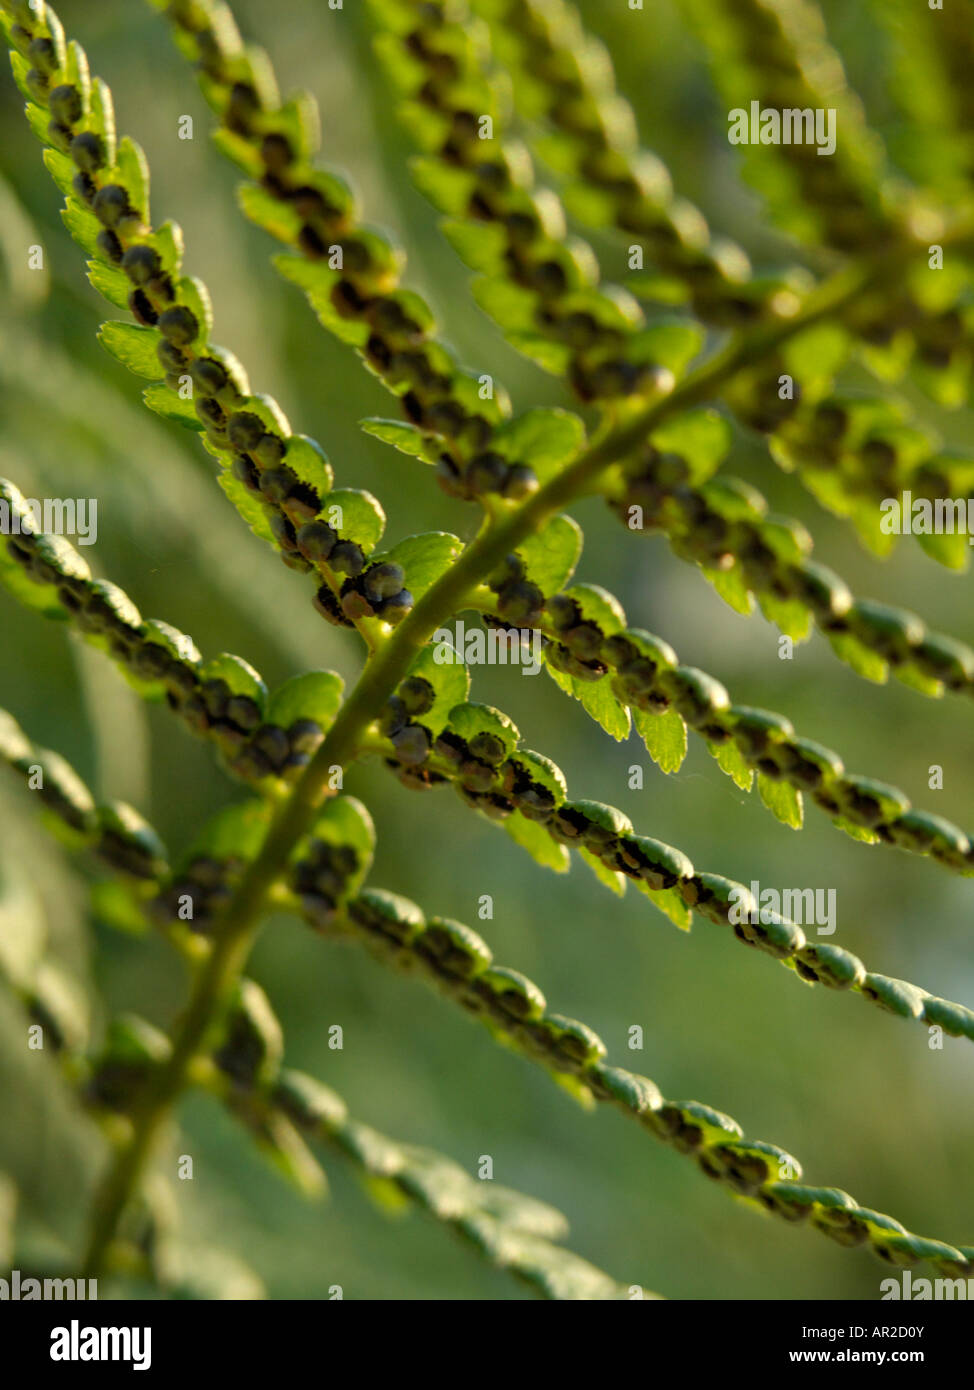 Common male fern (Dryopteris filix-mas) Stock Photo